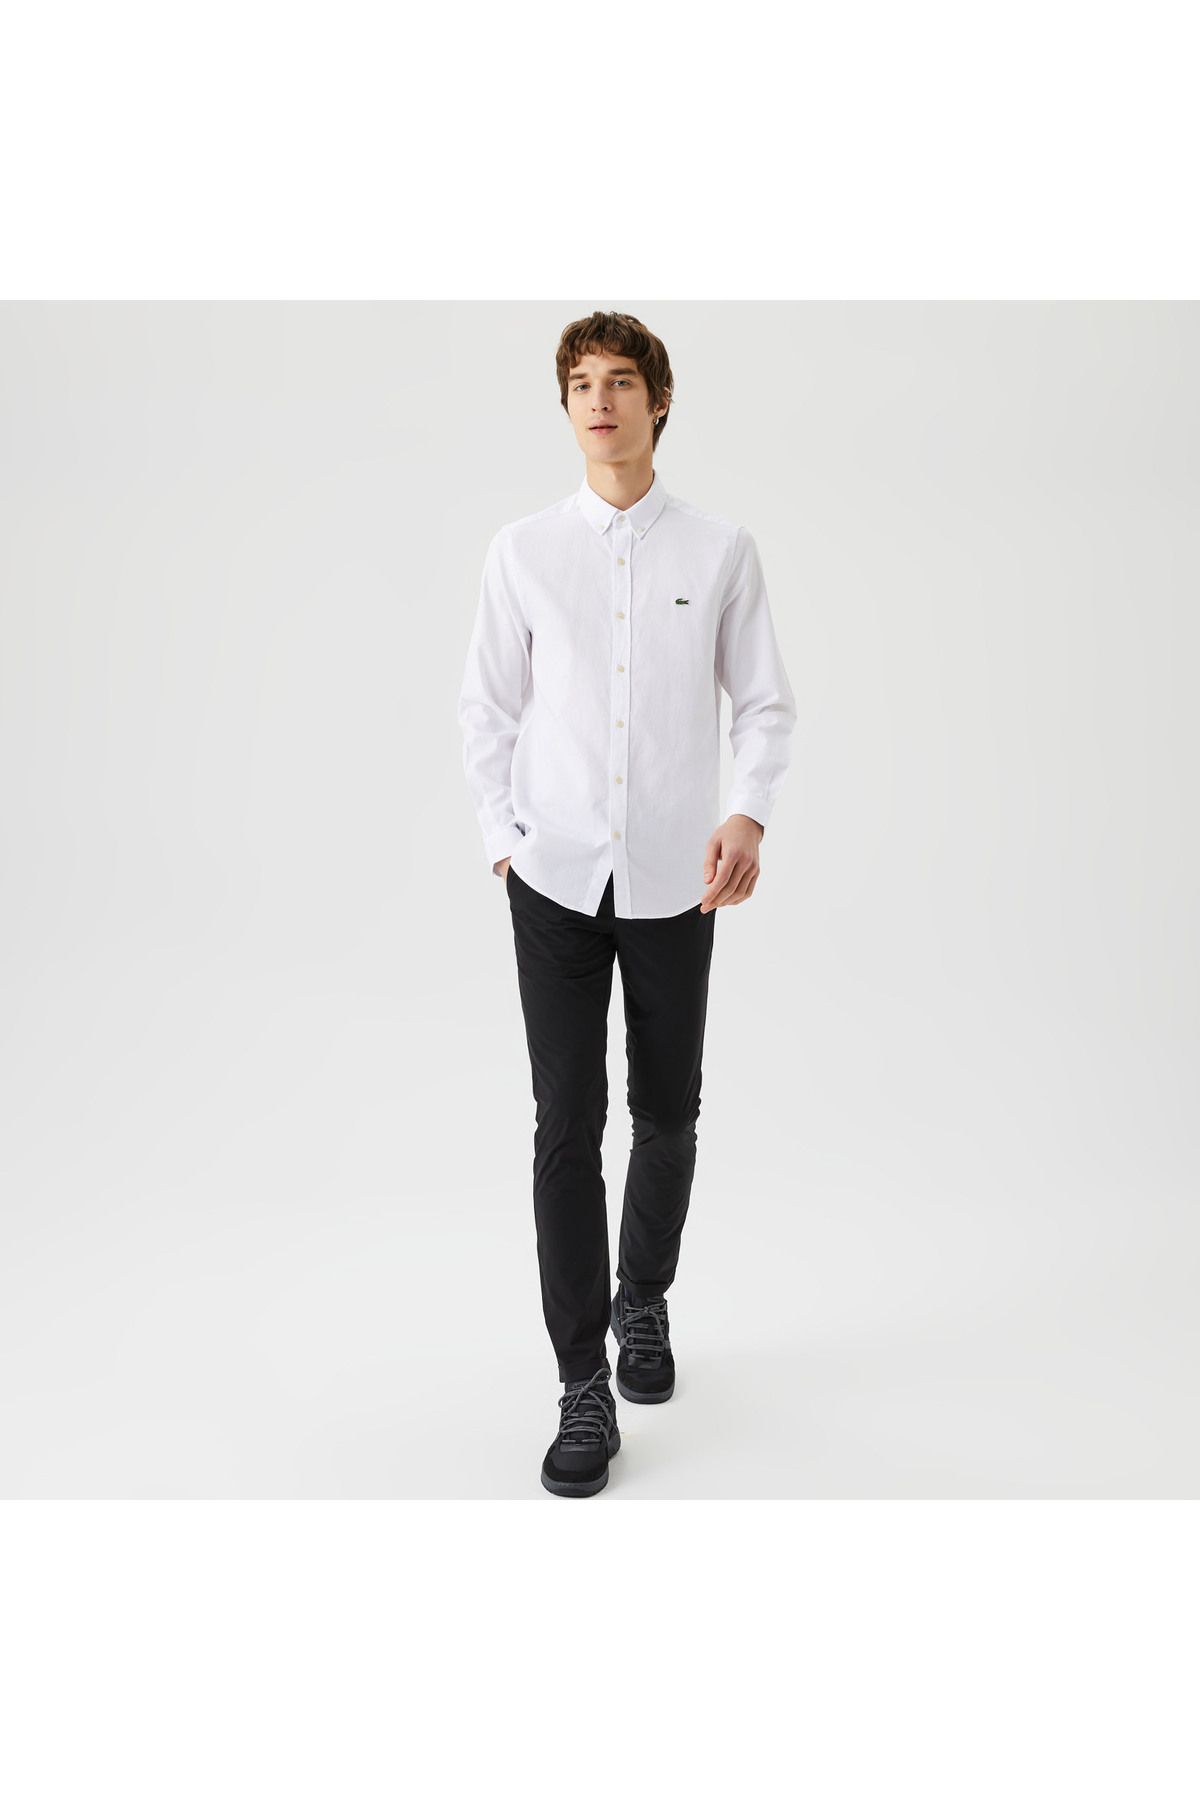 Lacoste پیراهن سفید دکمه باریک مردانه